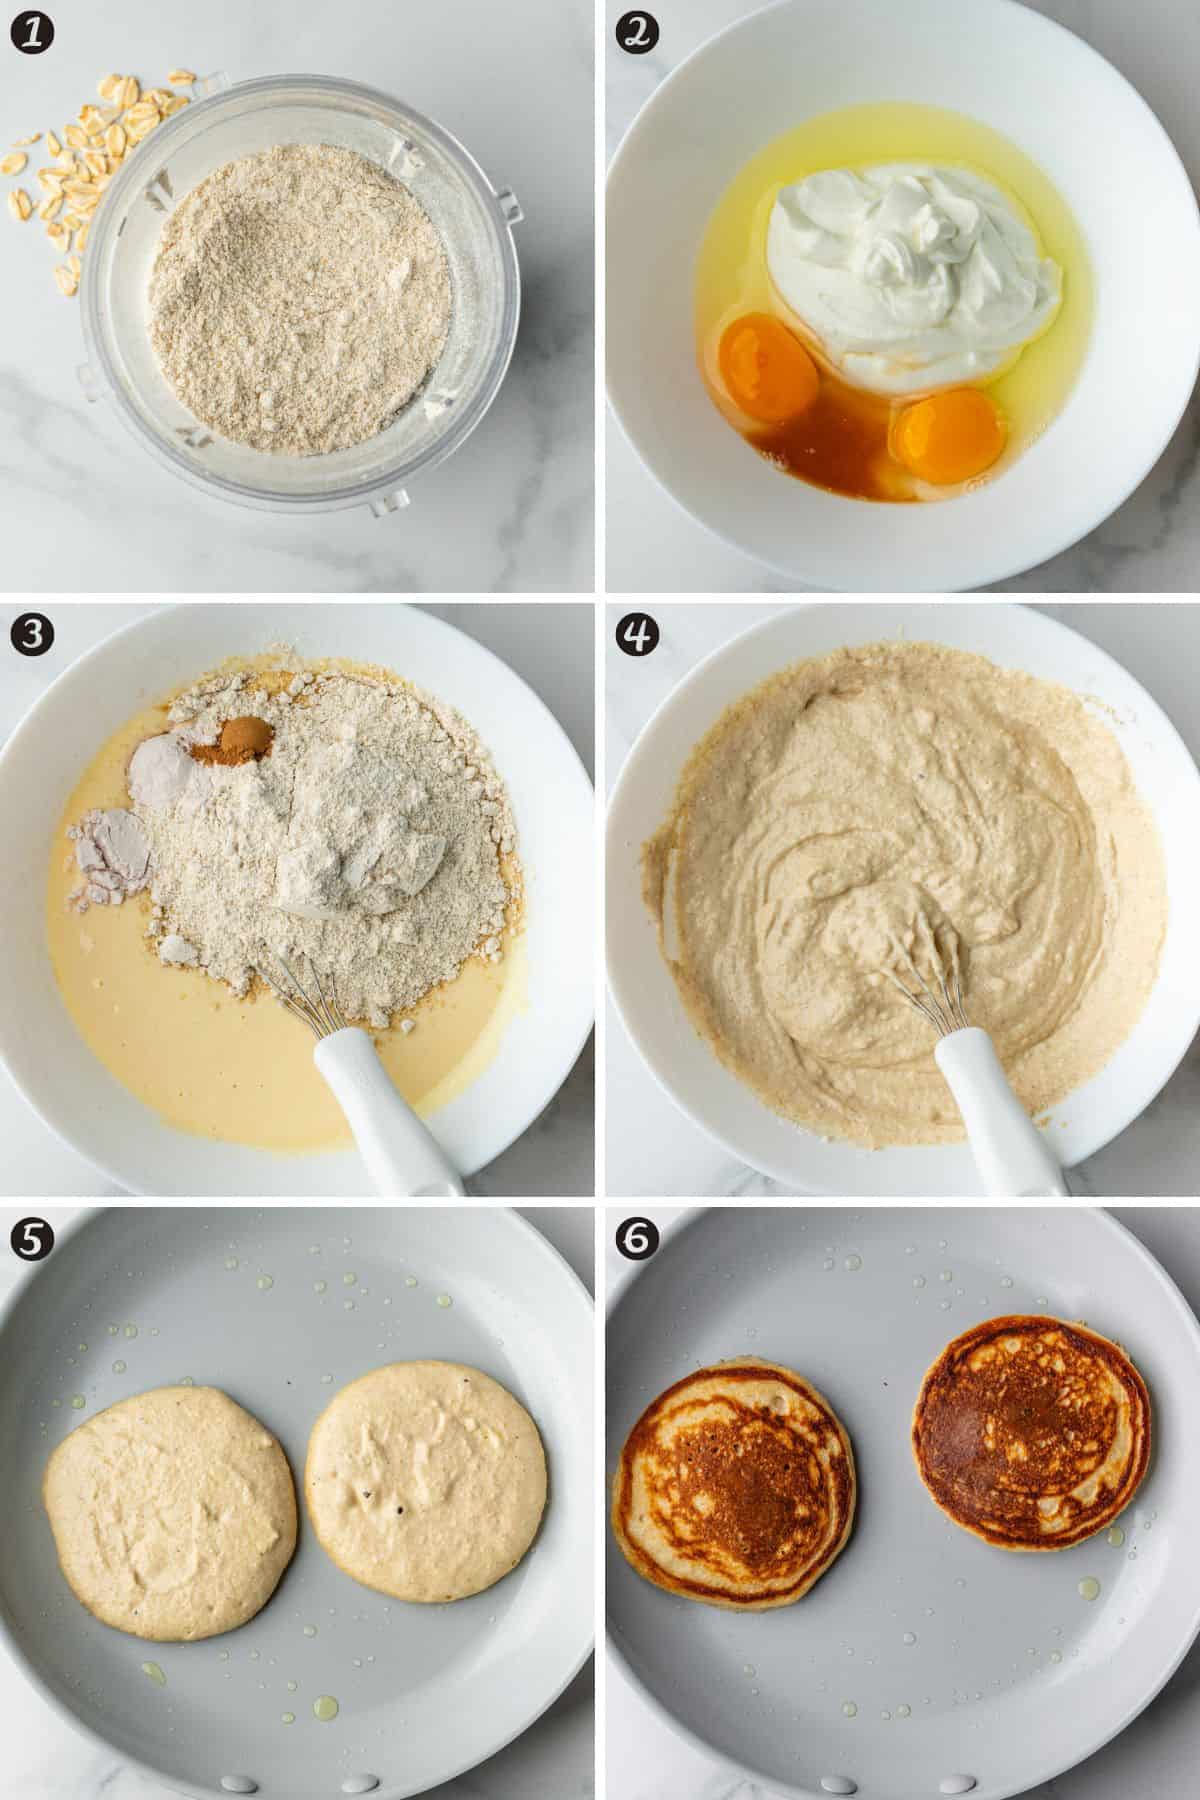 Steps on how to make Greek yogurt pancakes